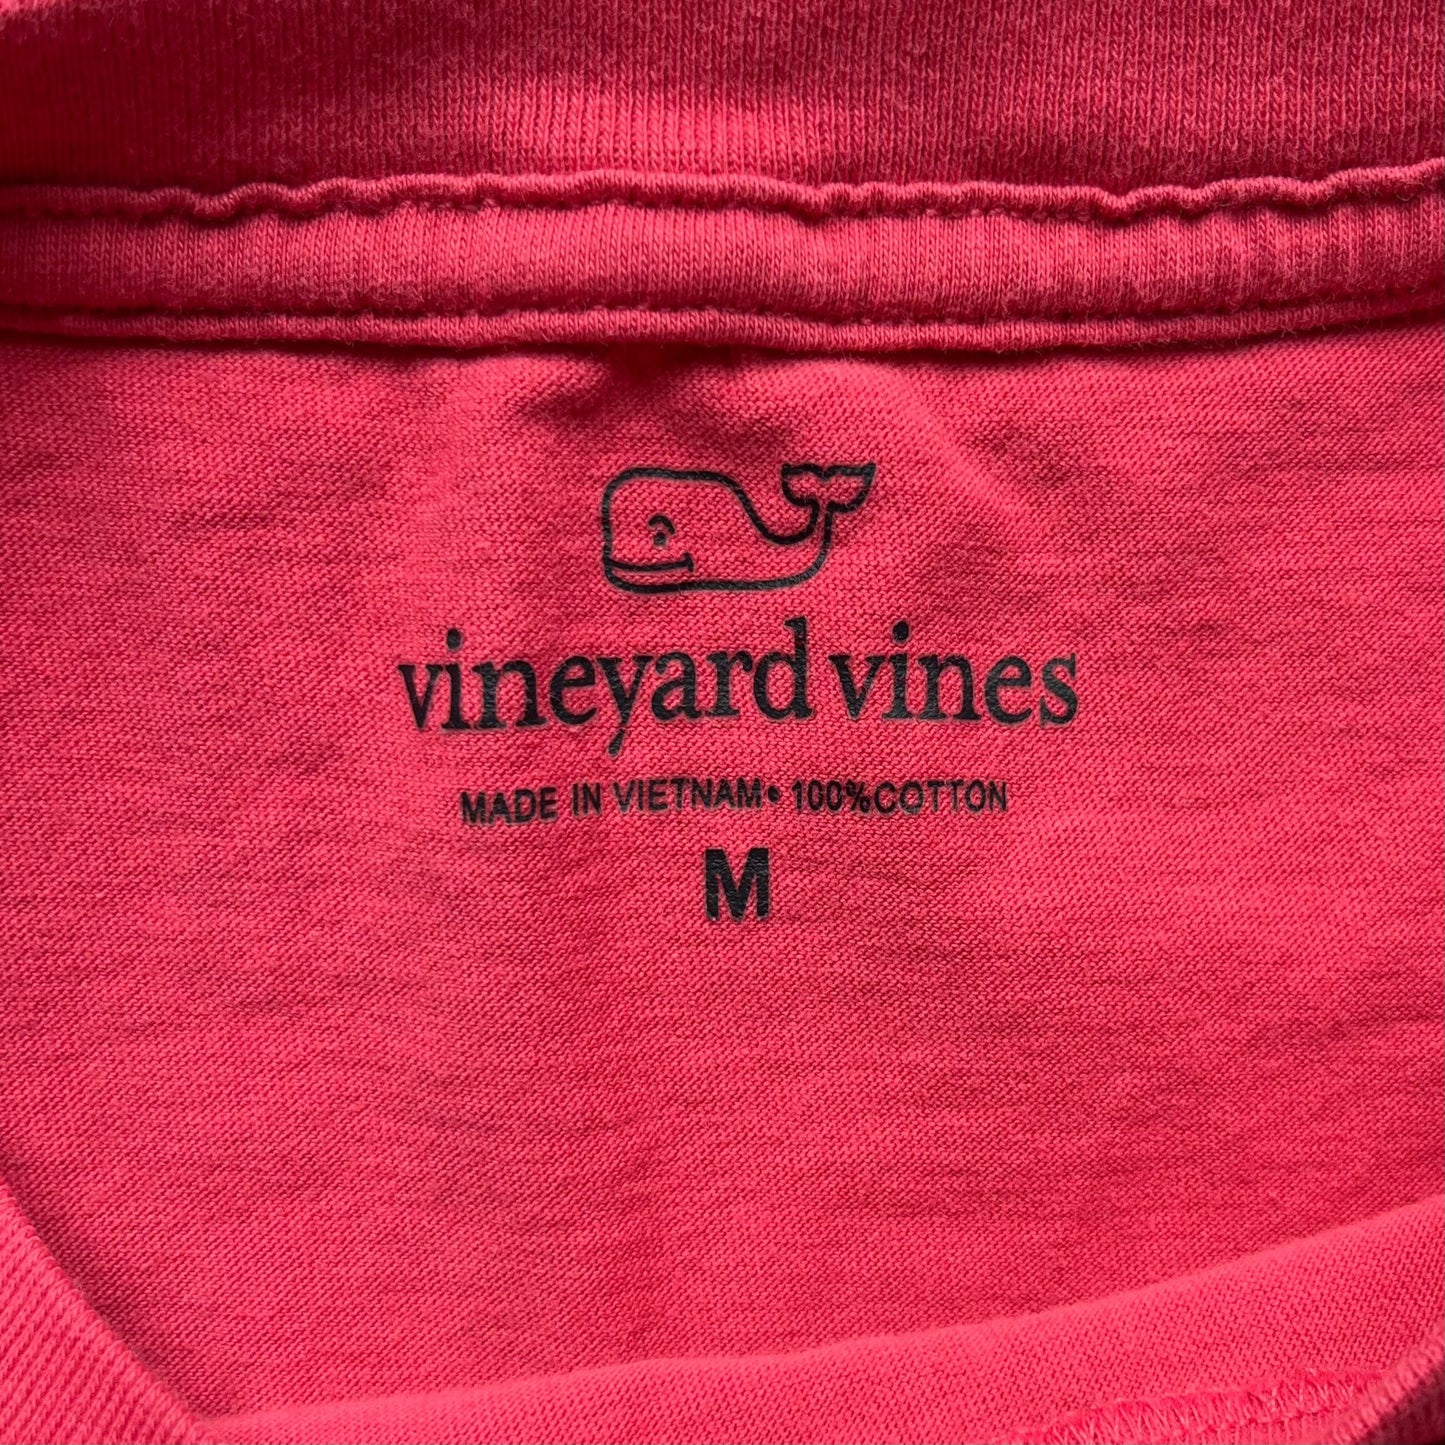 Vineyard Vines - Boat (Medium)